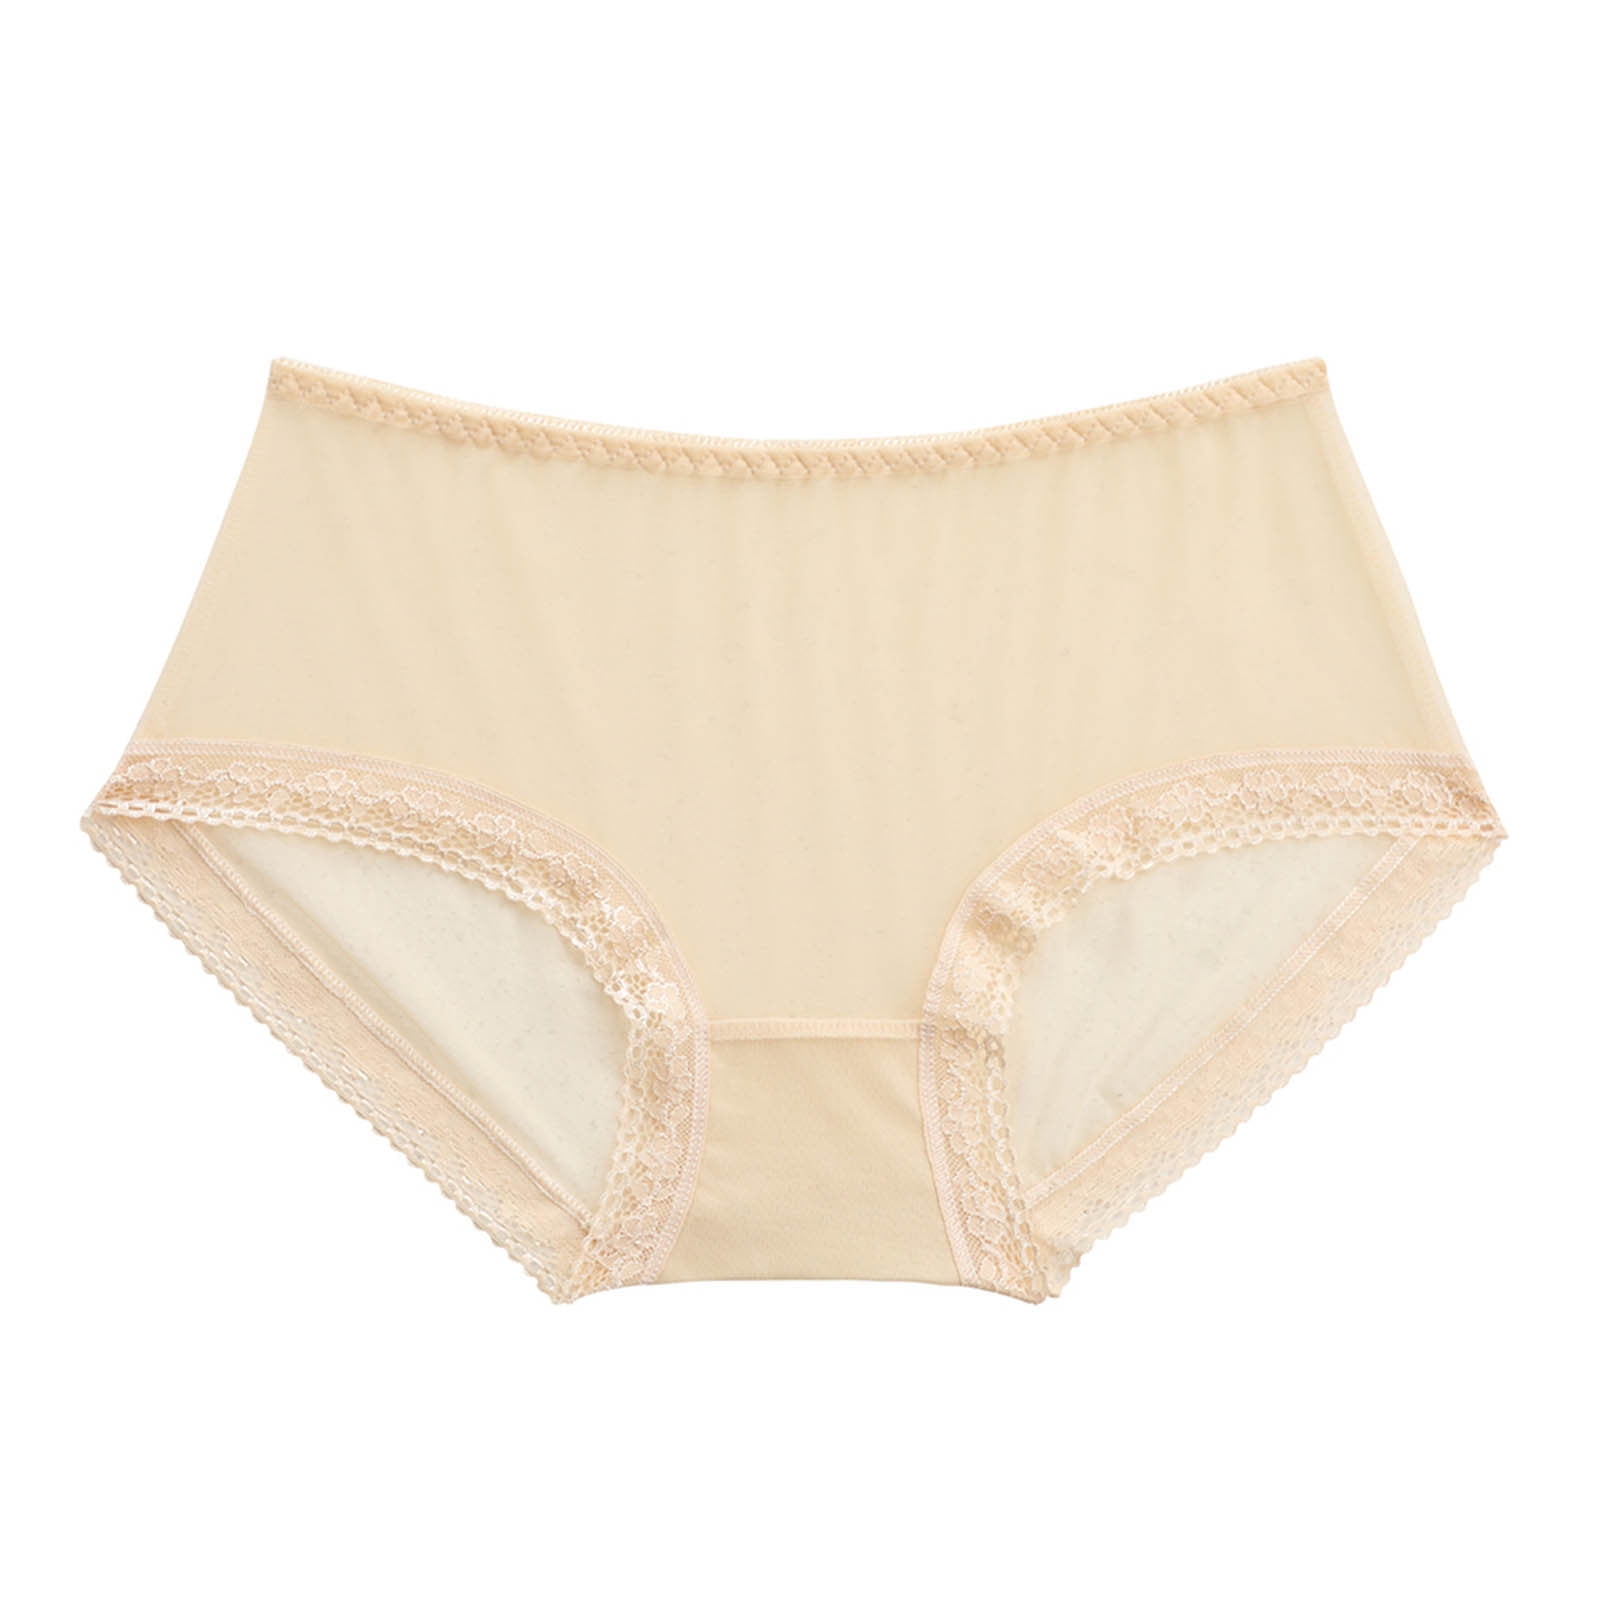 adviicd Pantis for Women Teen Girls Underwear Cotton Soft Panties